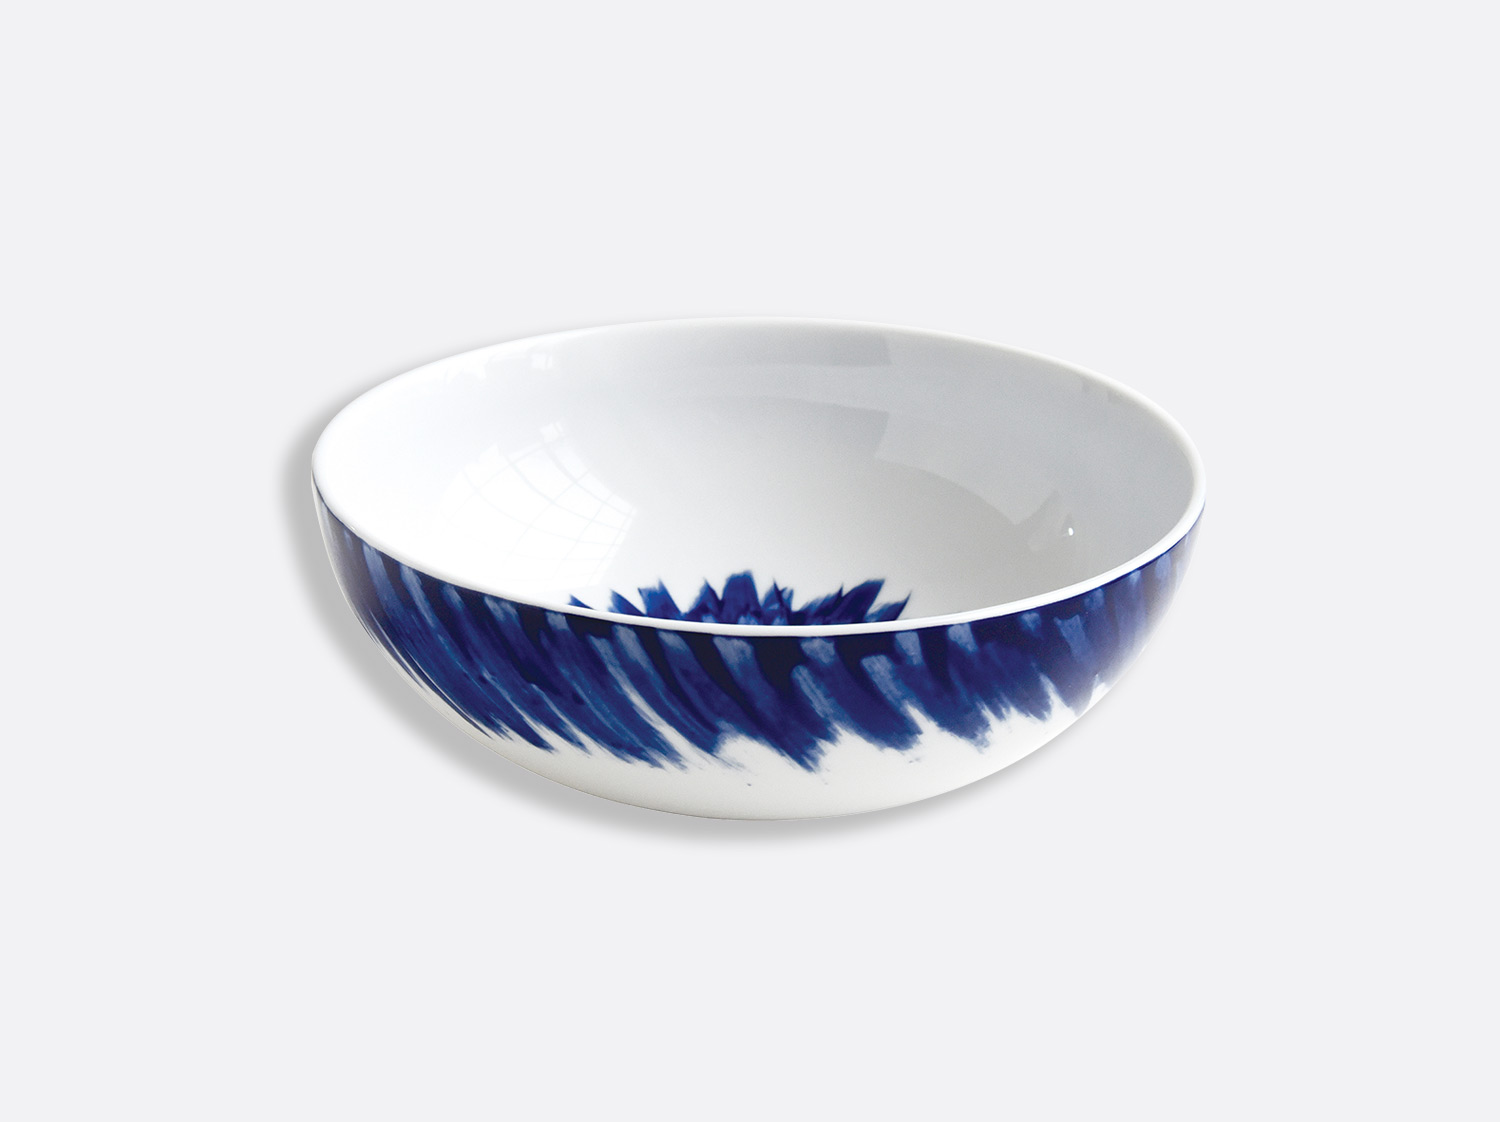 China Medium bowl D.7'' H. 3'' of the collection IN BLOOM - Zemer Peled | Bernardaud